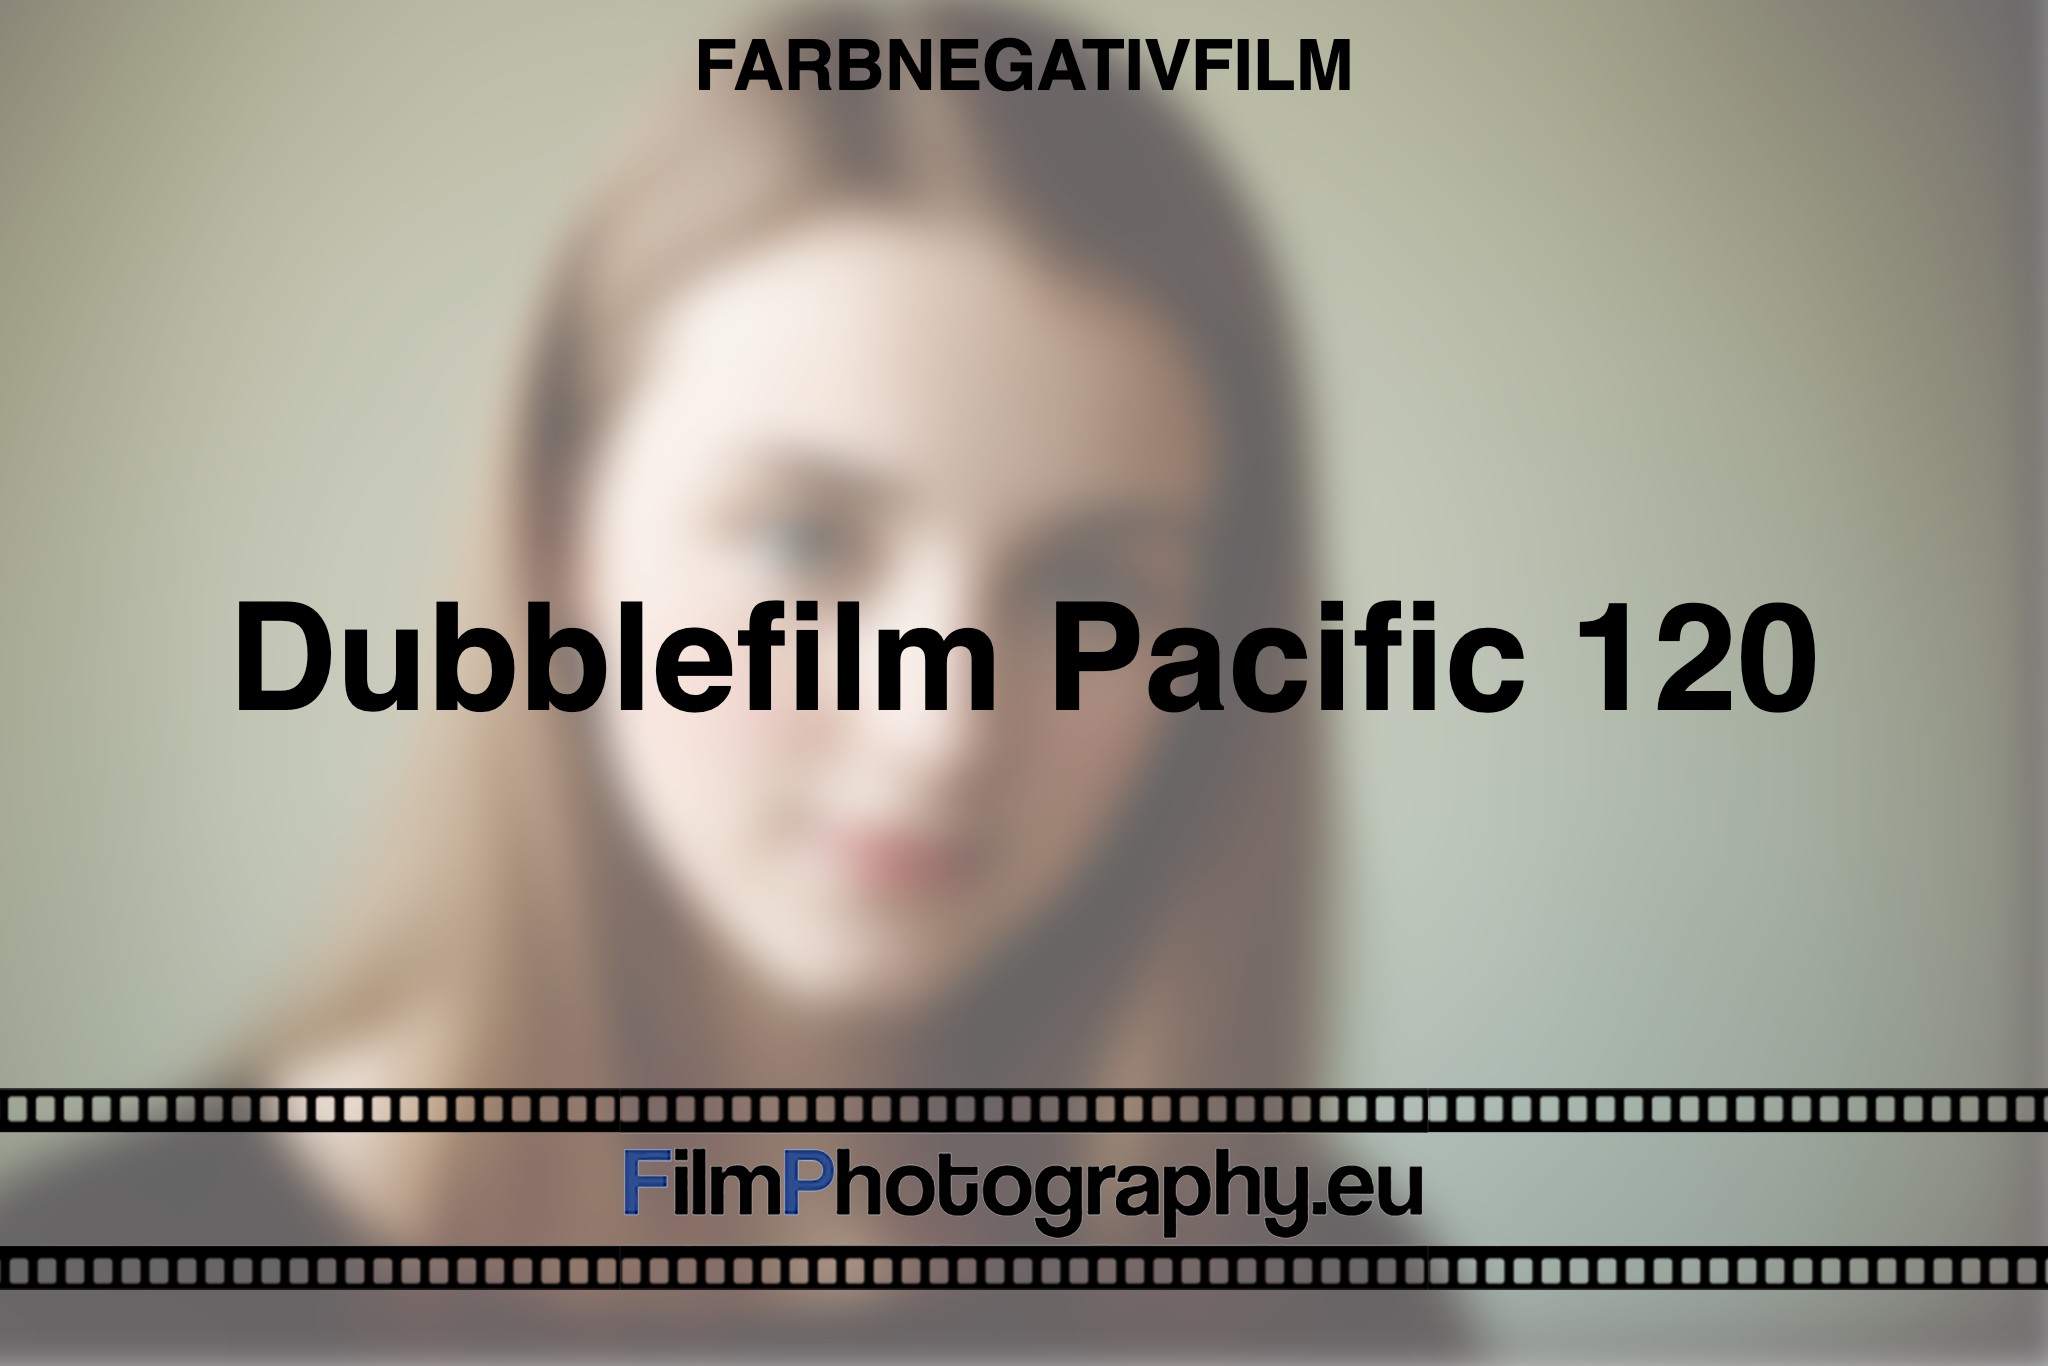 Dubblefilm-Pacific-120-Farbnegativfilm-bnv